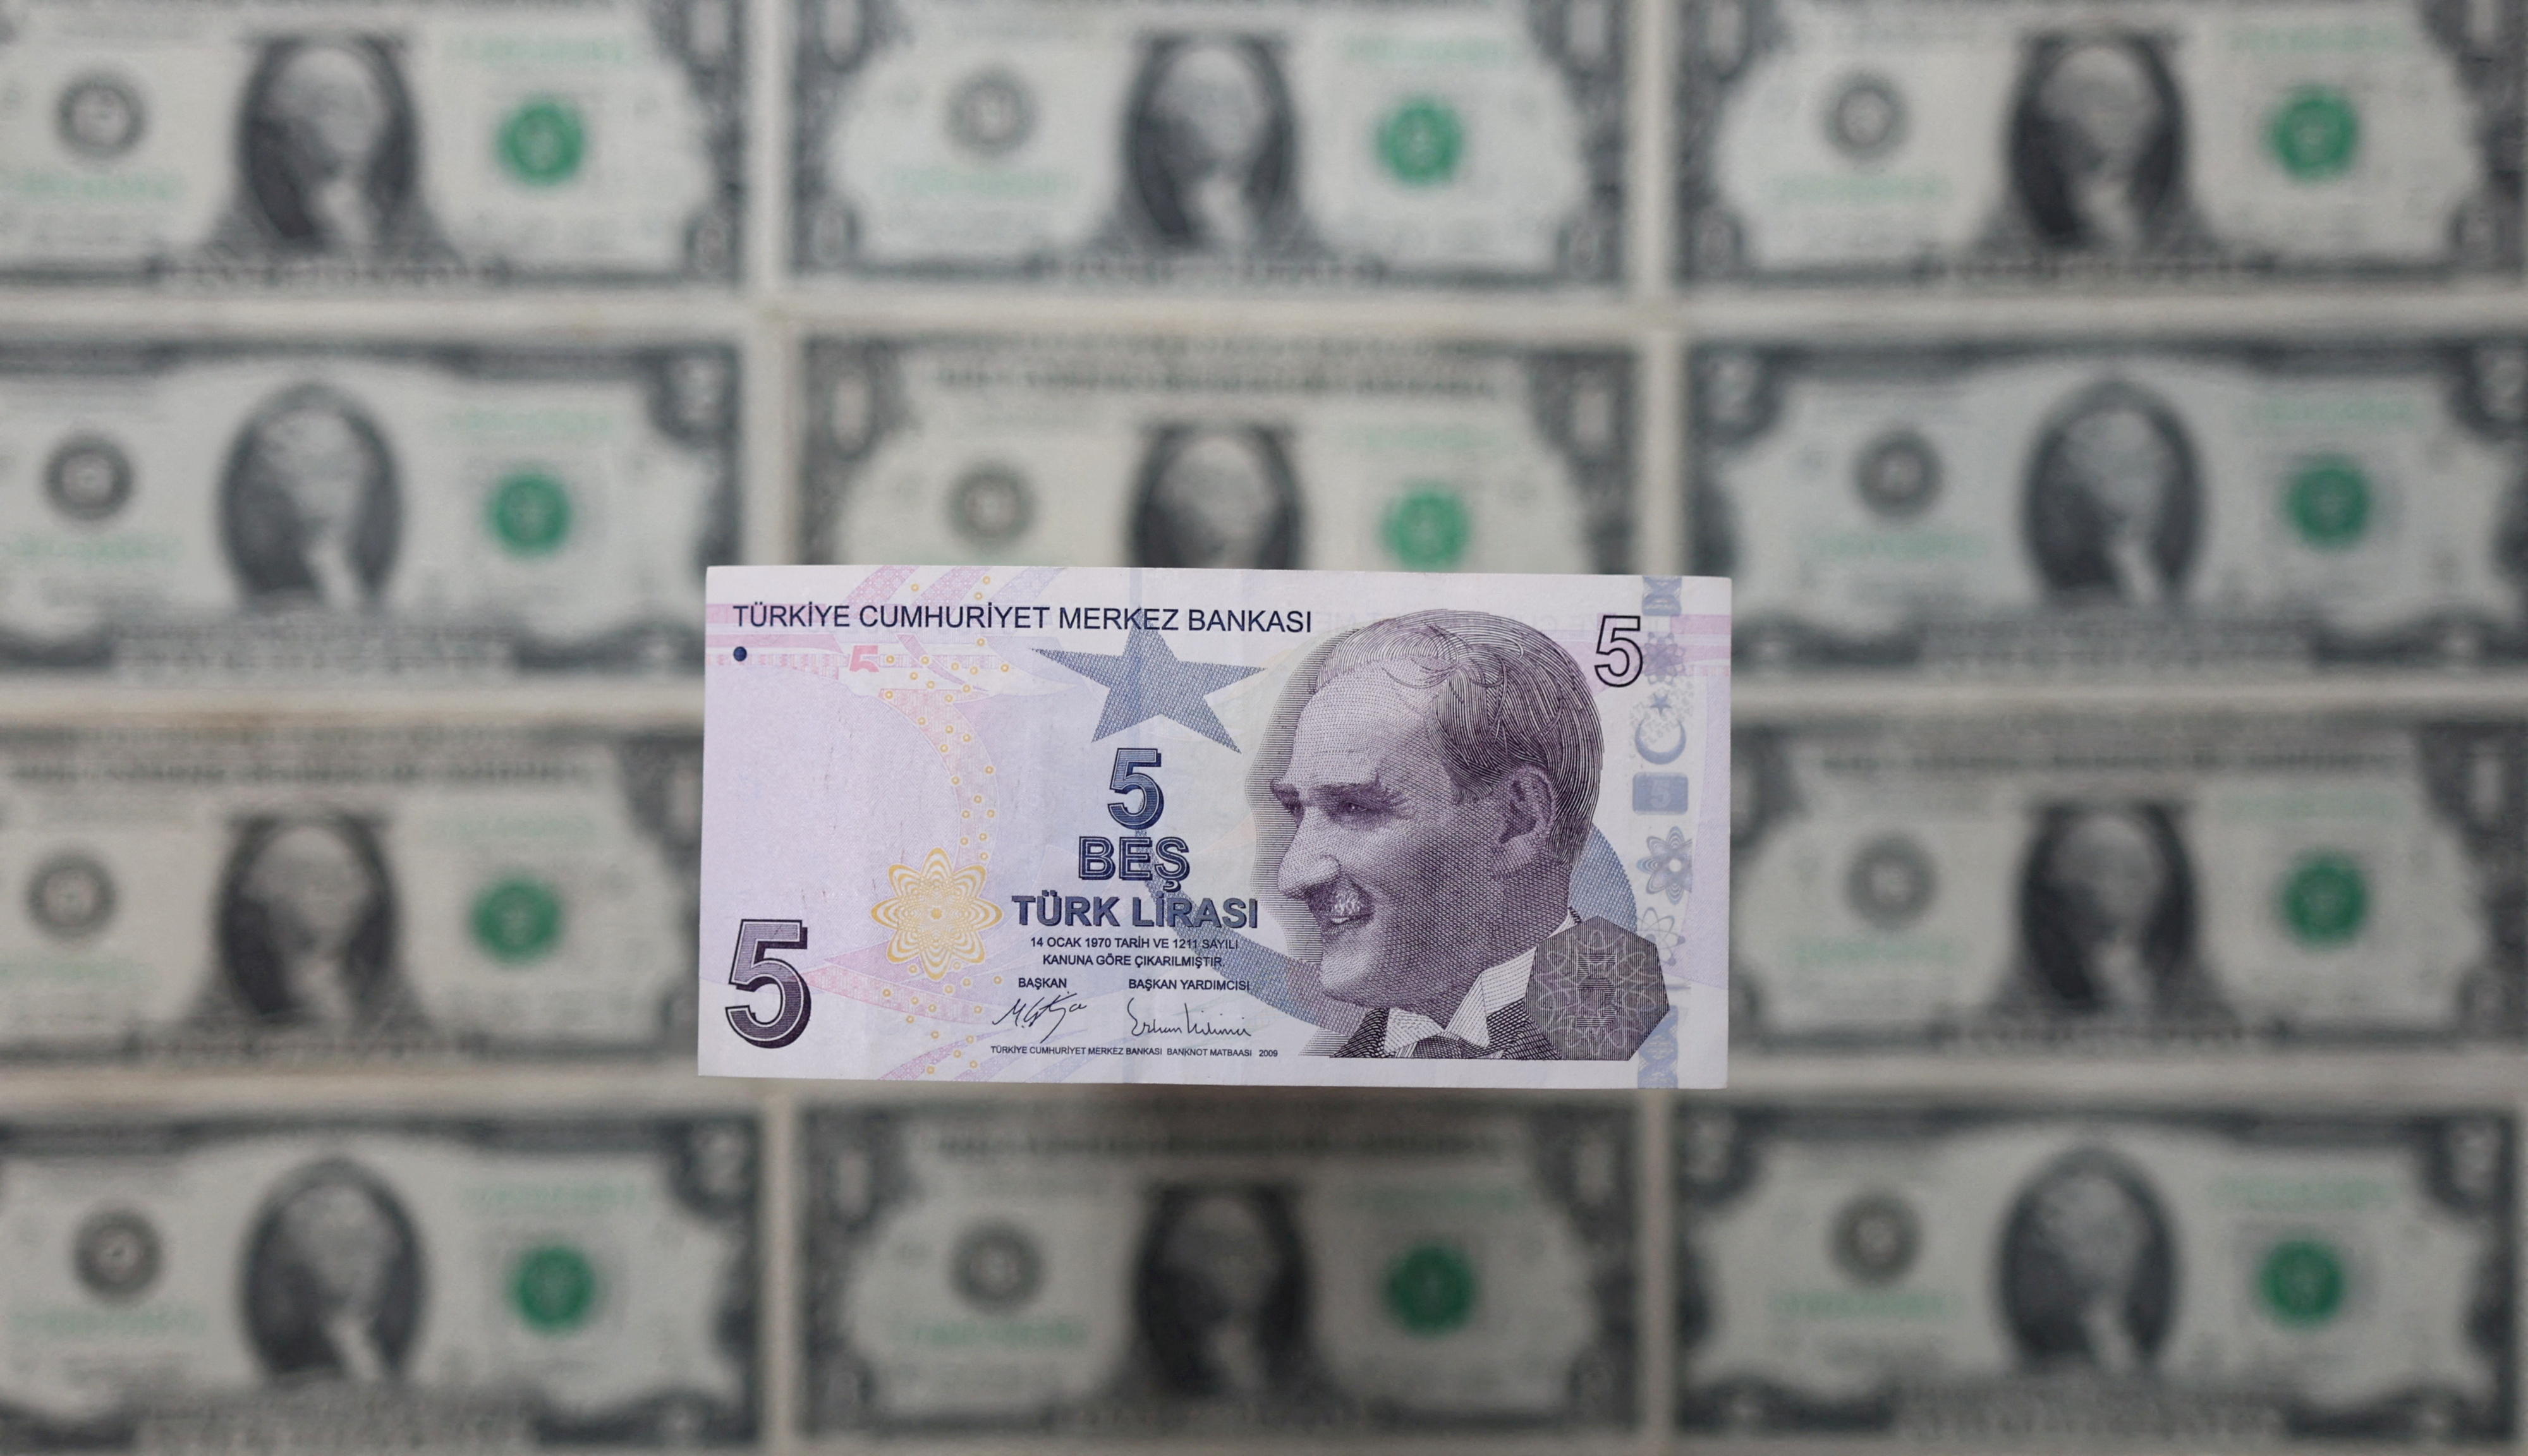 Illustration shows Turkish lira banknote placed on U.S. Dollar banknotes